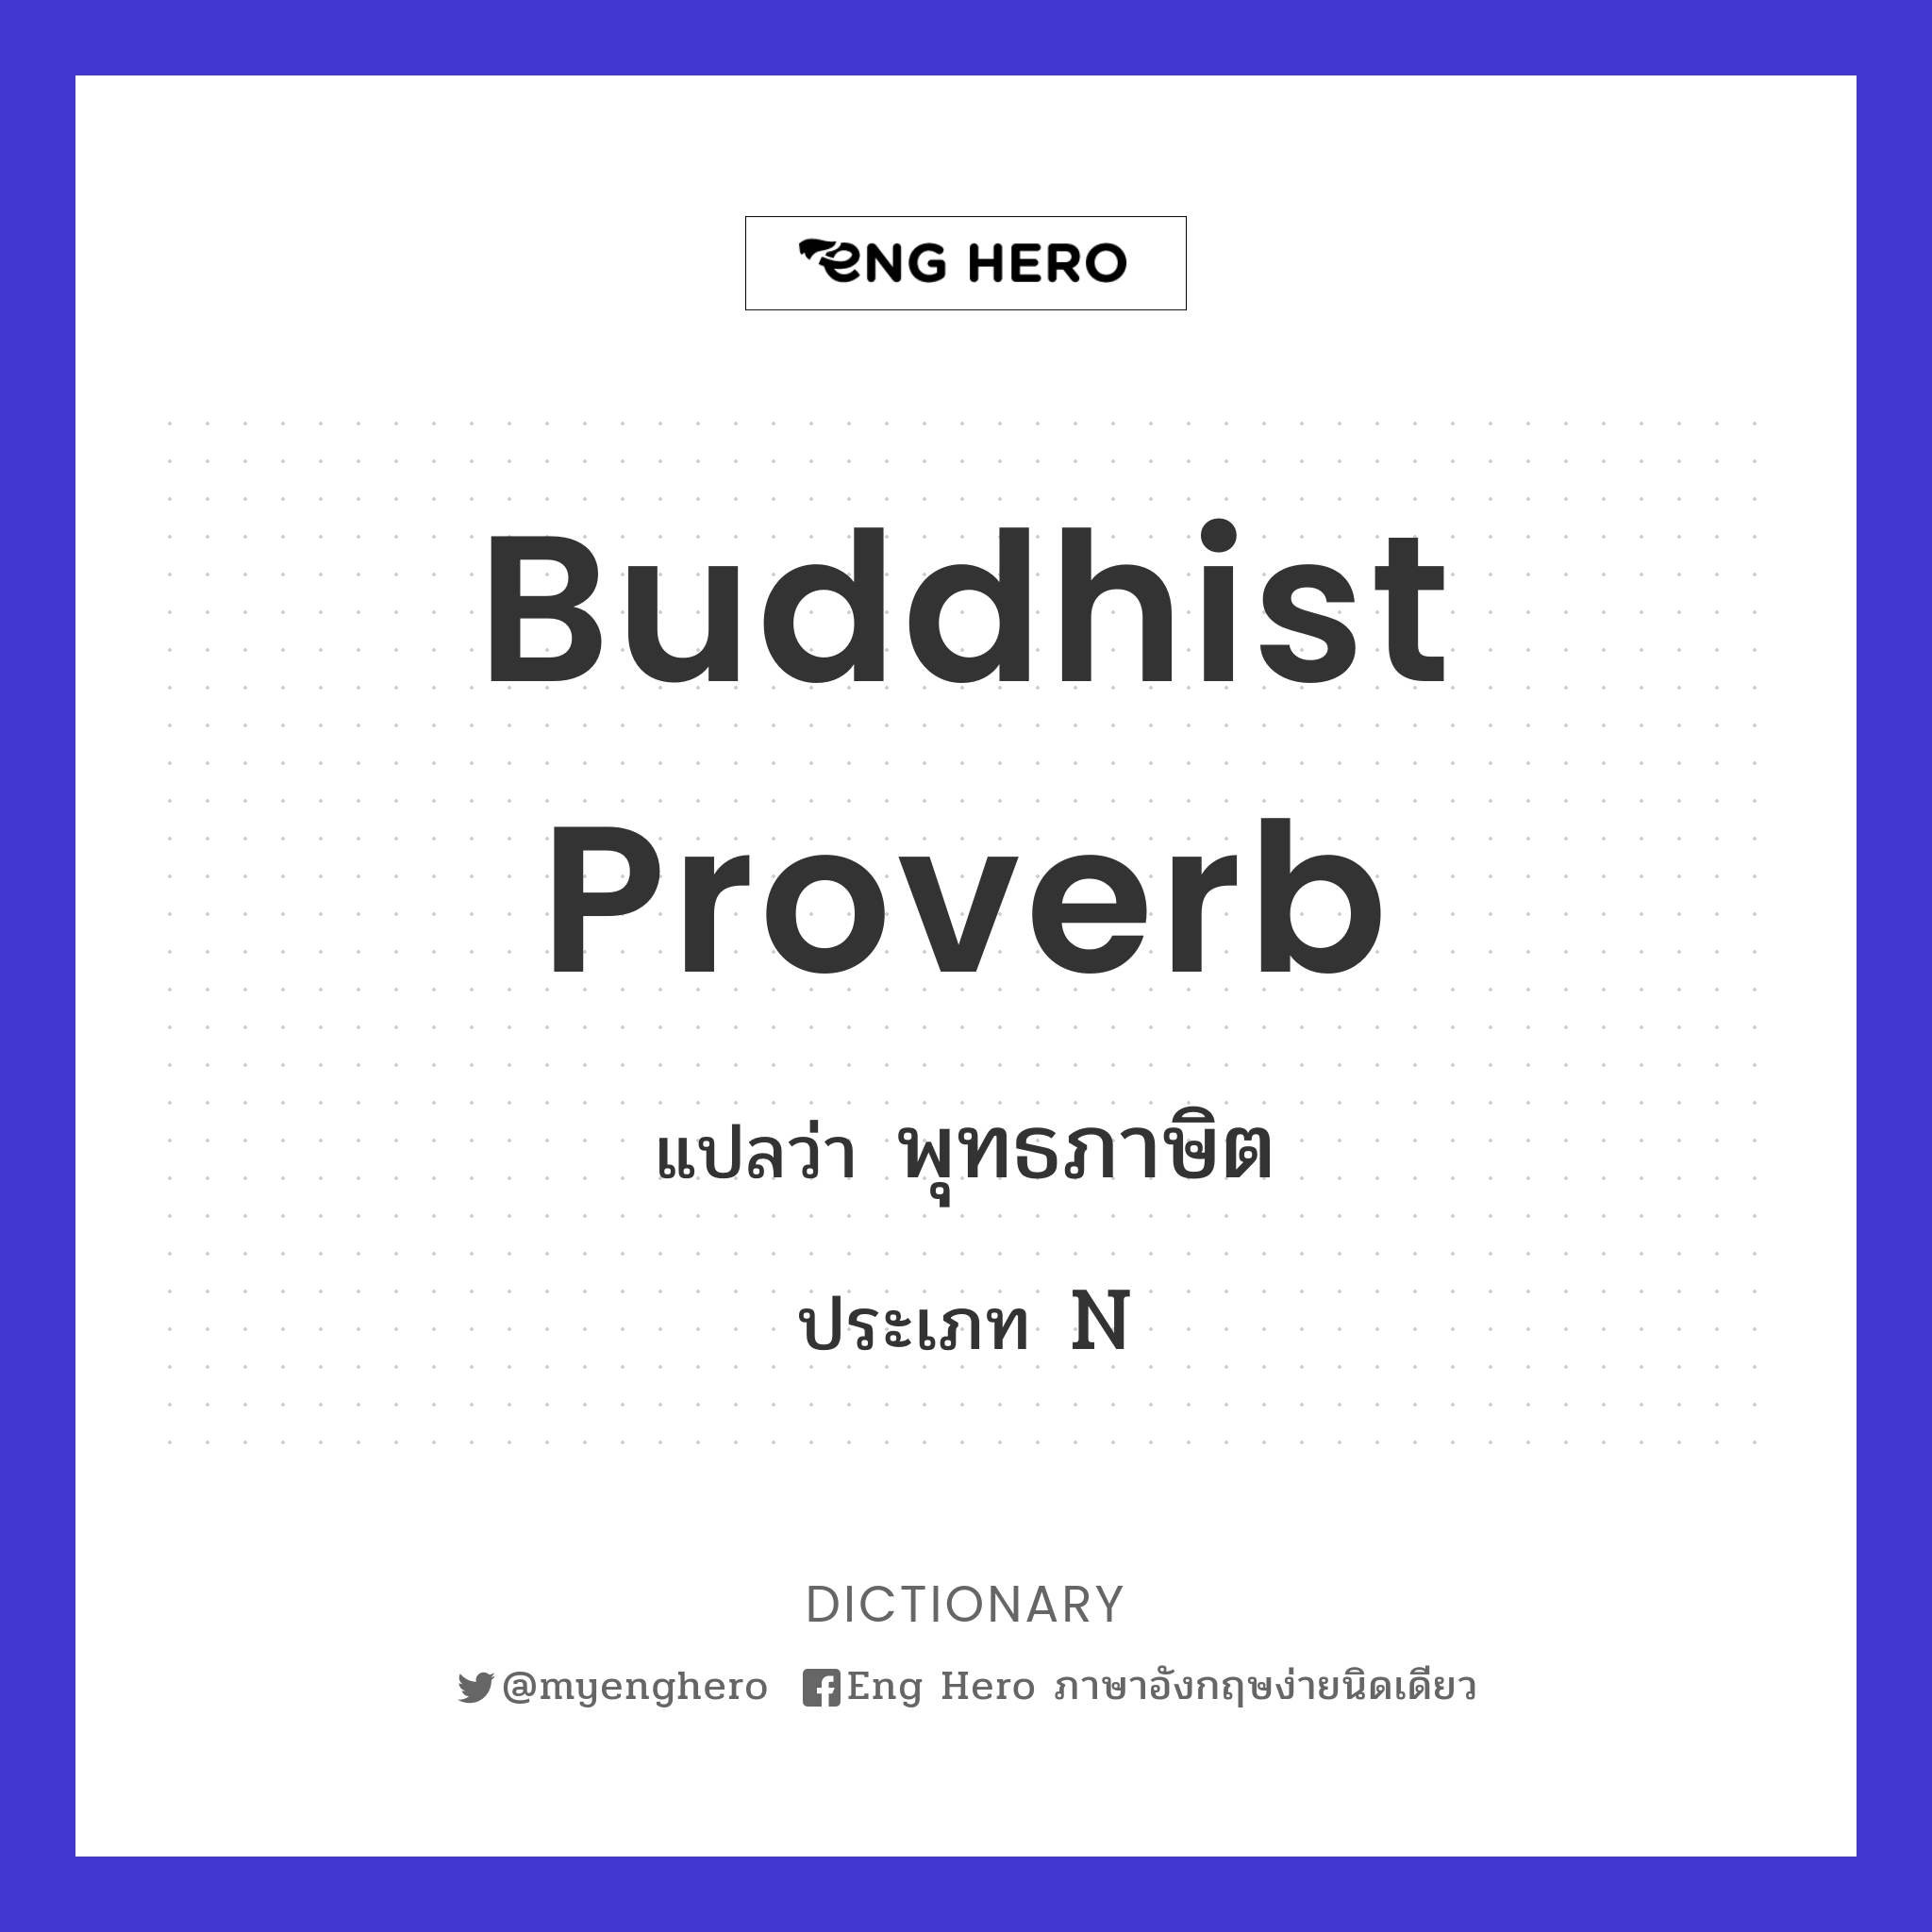 Buddhist proverb